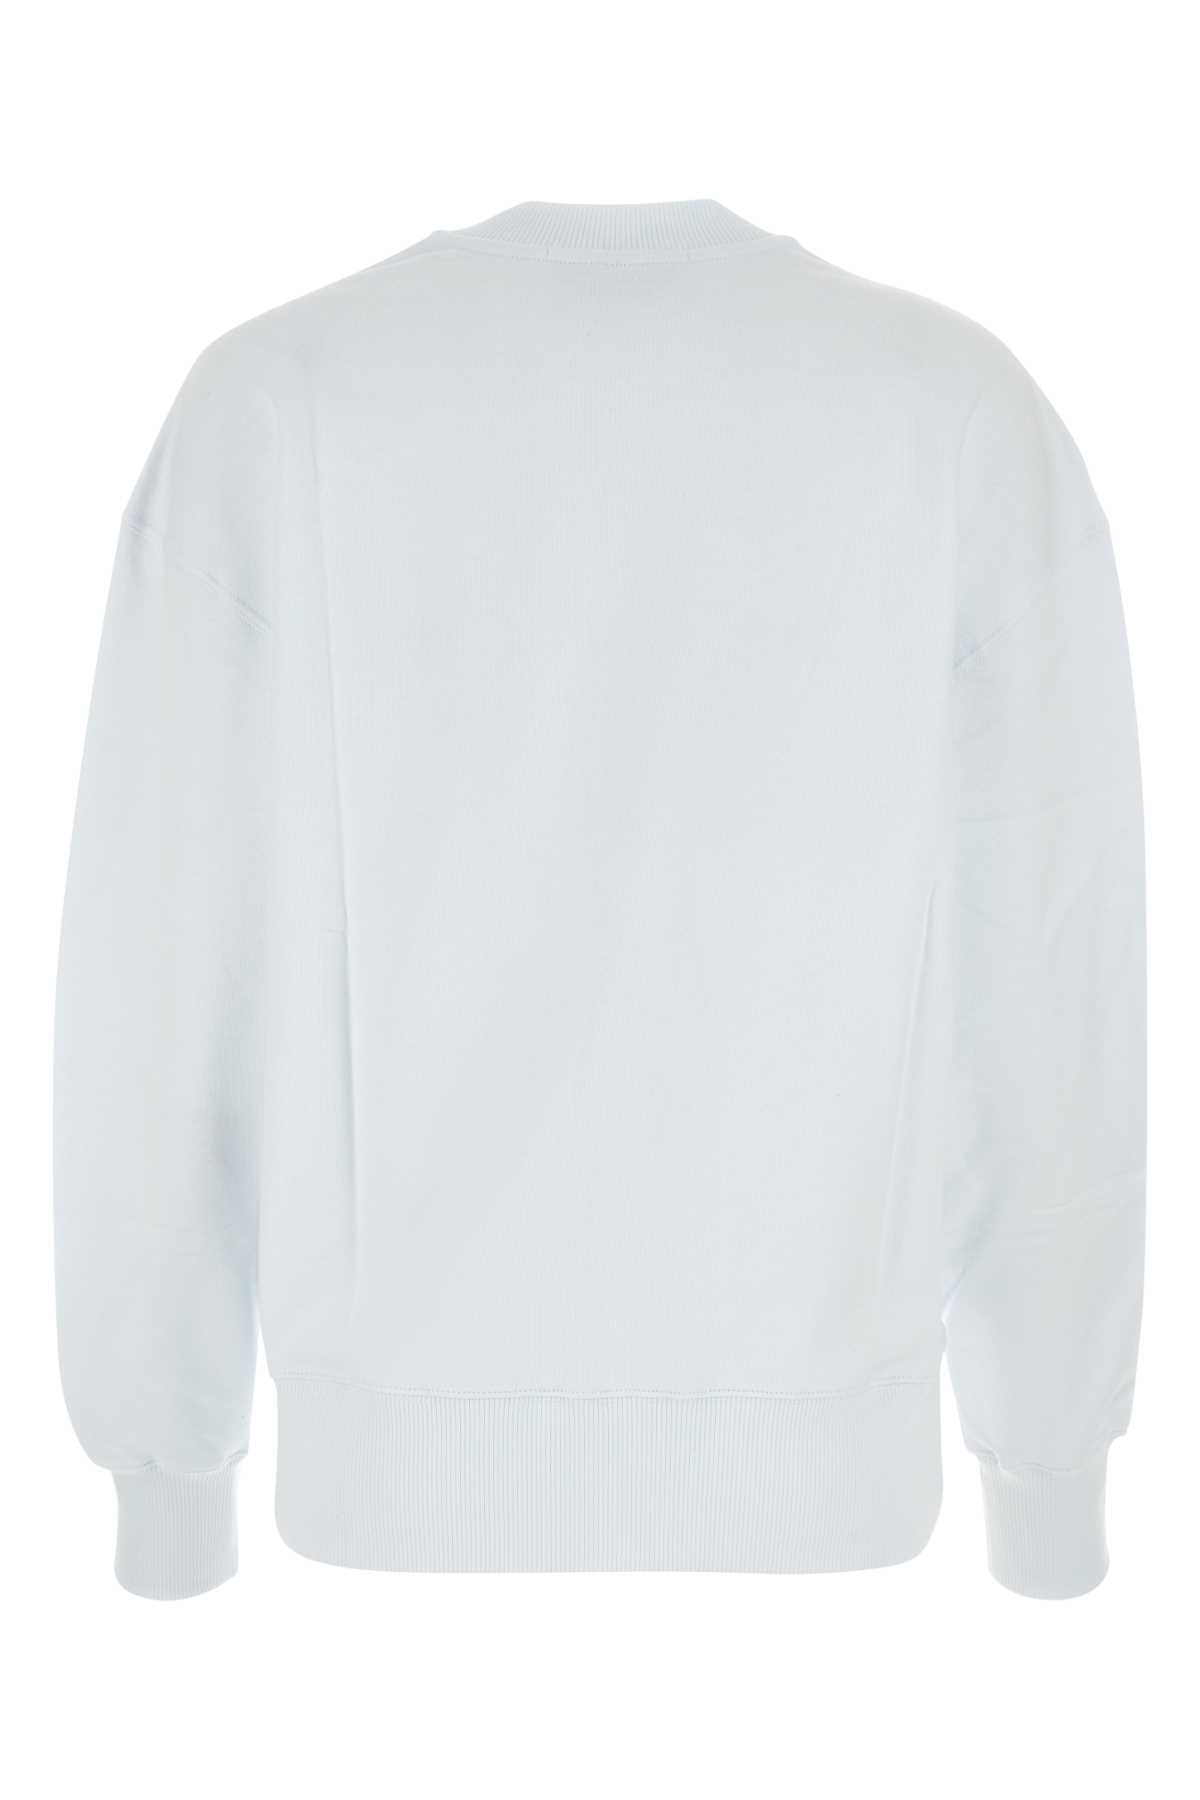 Msgm White Cotton Sweatshirt In White01